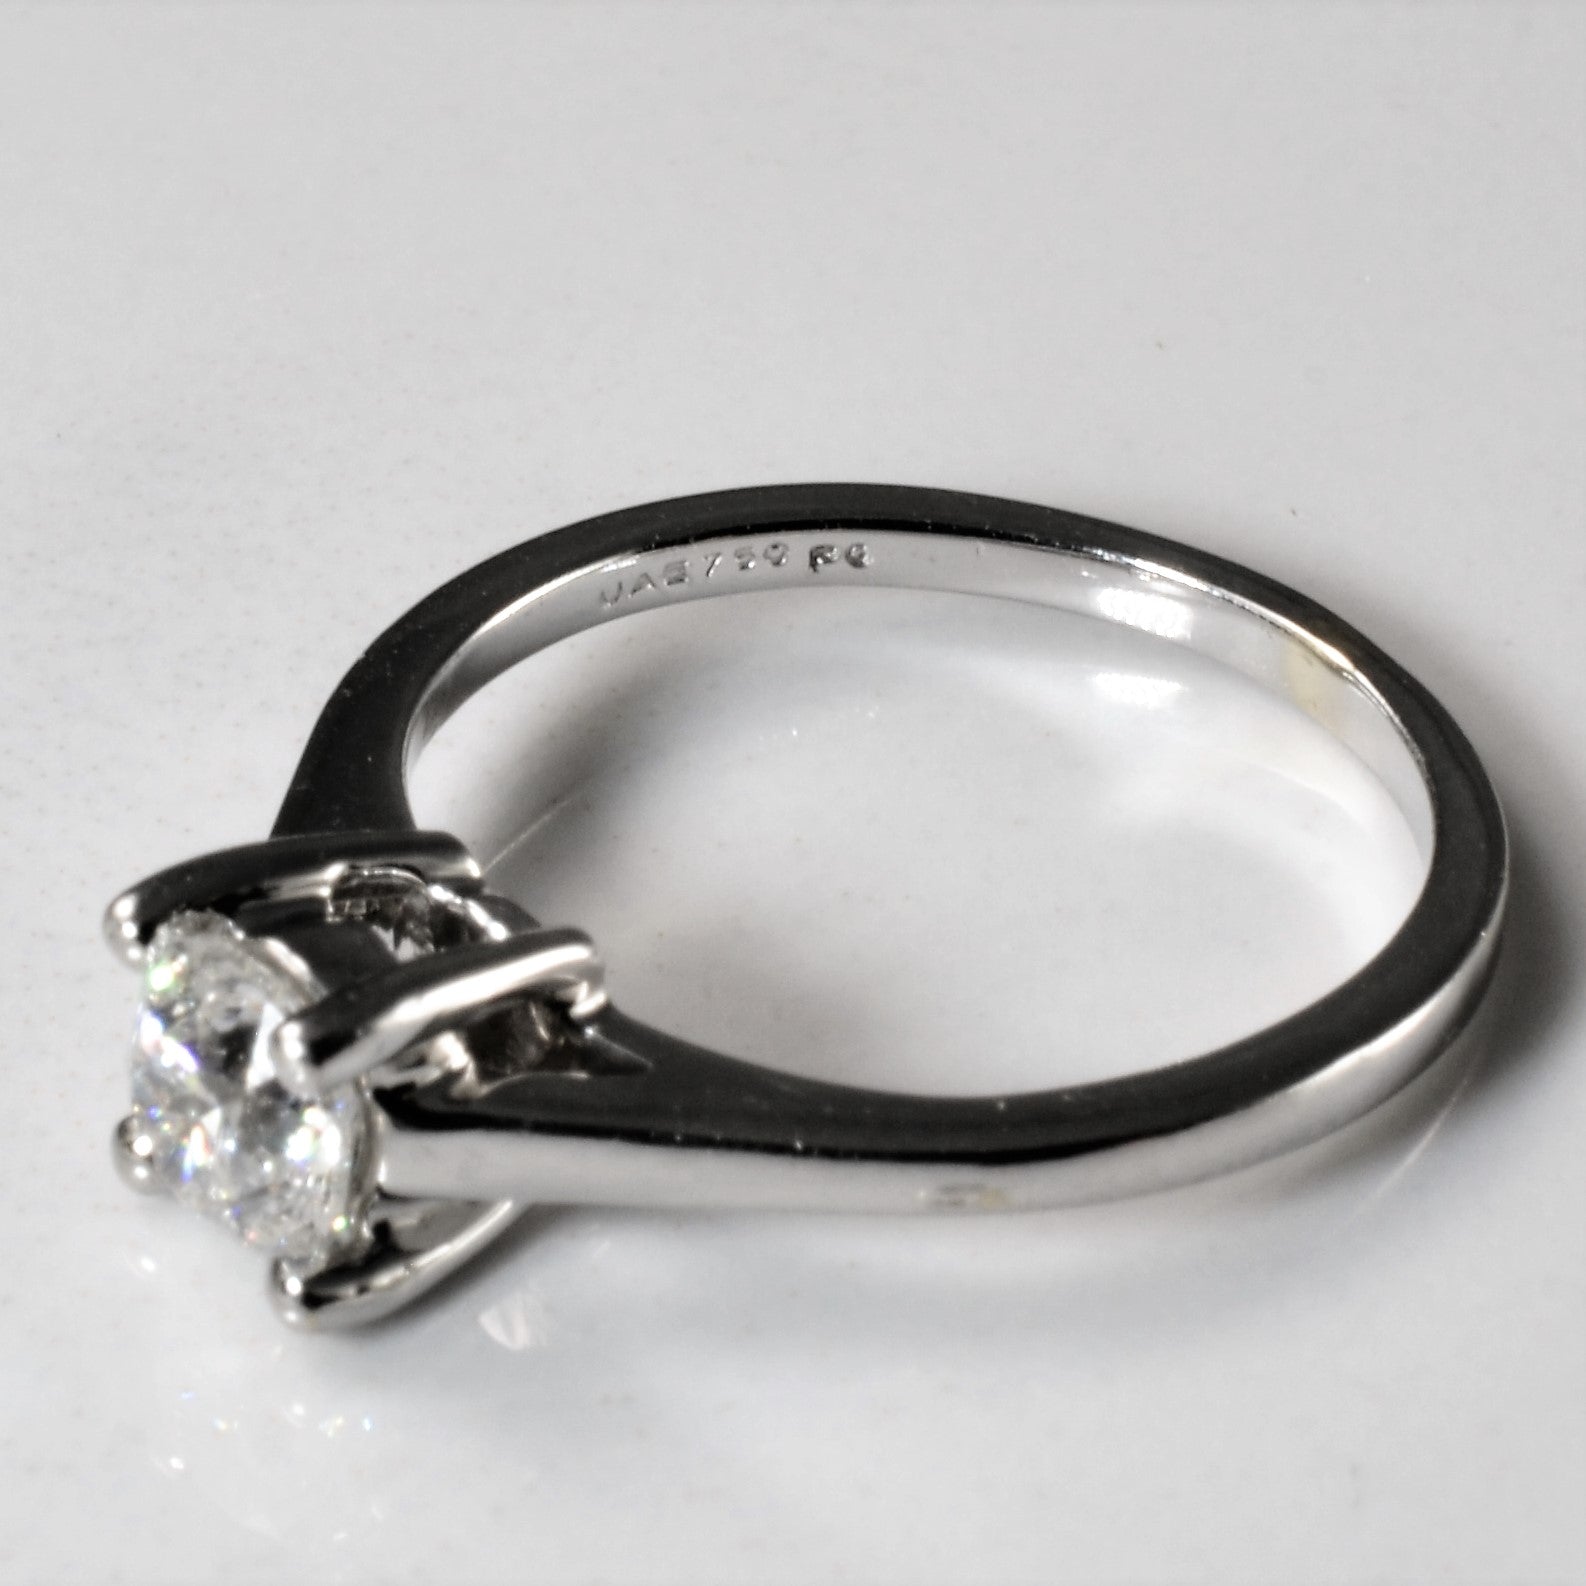 Solitaire Diamond Engagement Ring | 0.46ct | SZ 4.25 |